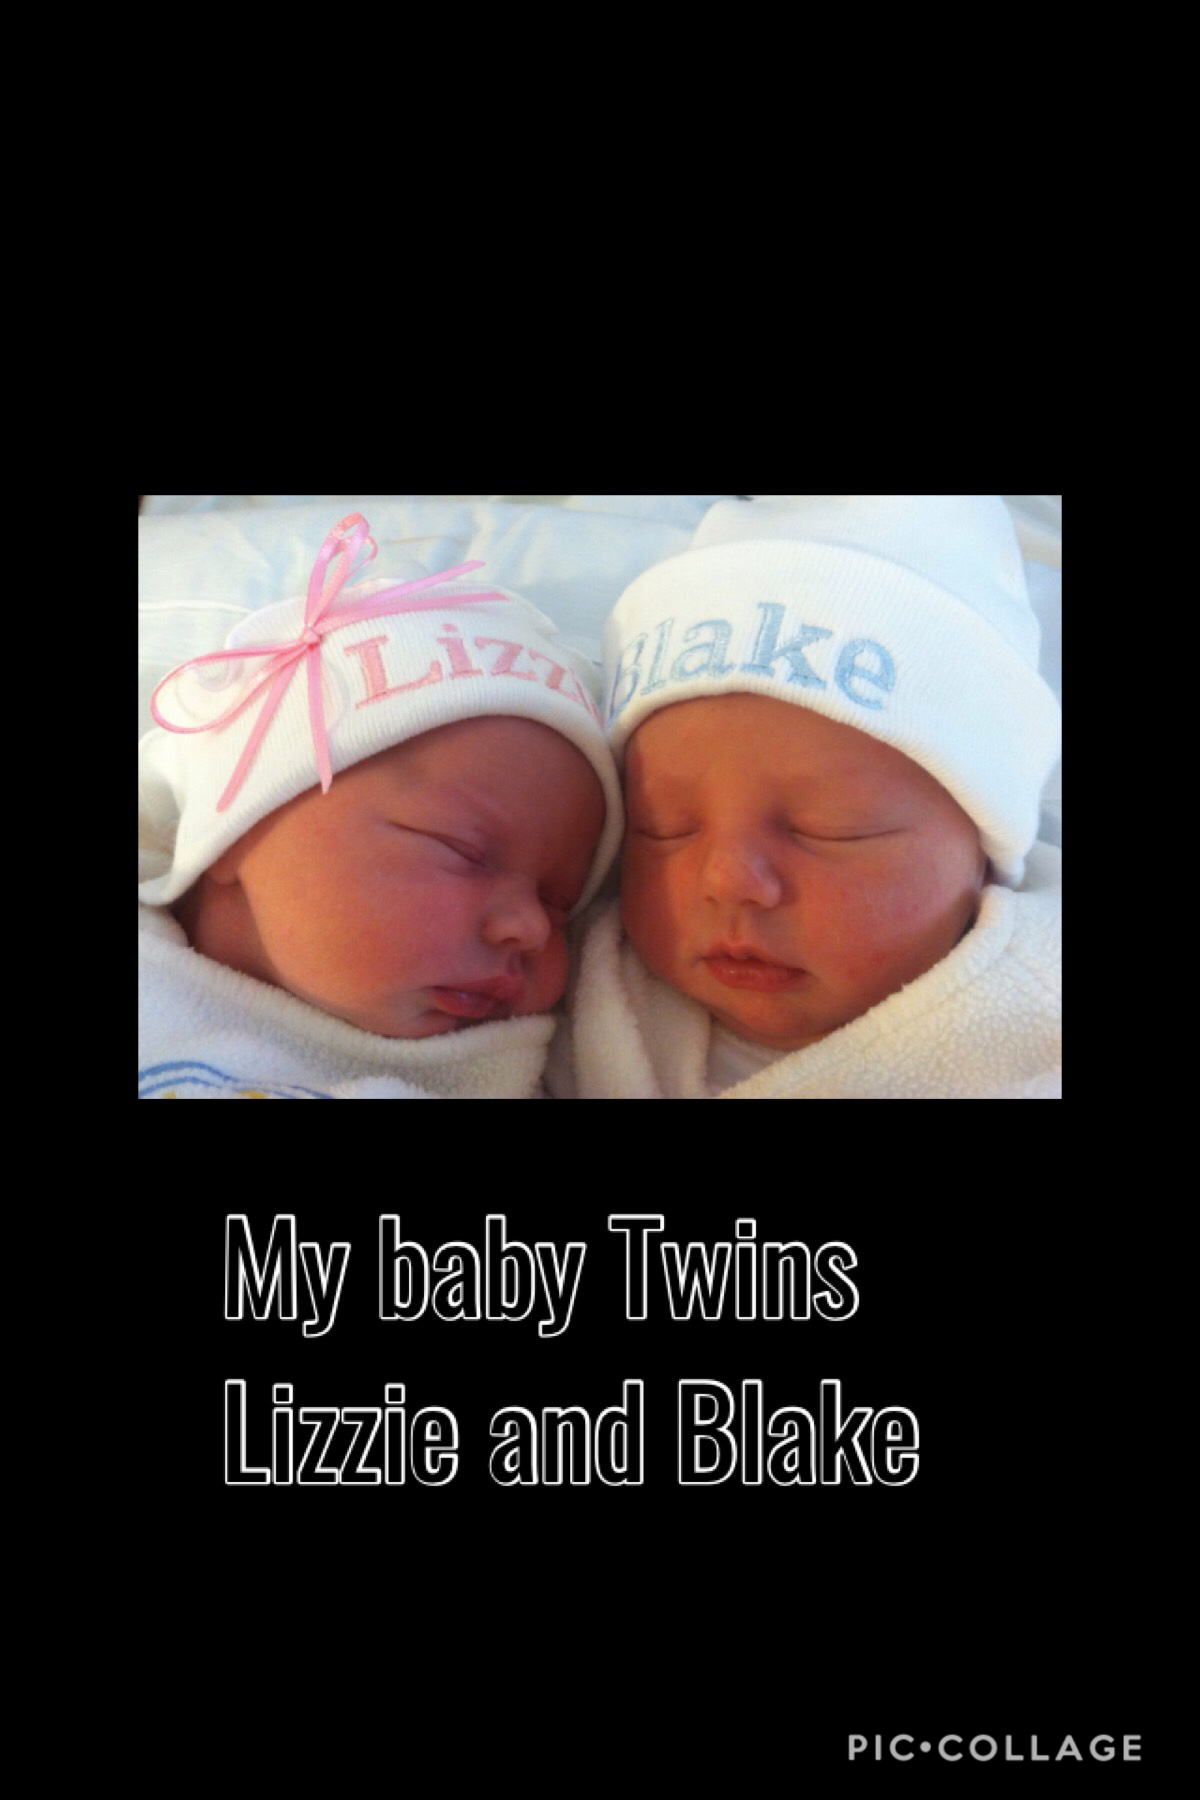 My twins Lizzie and Blake